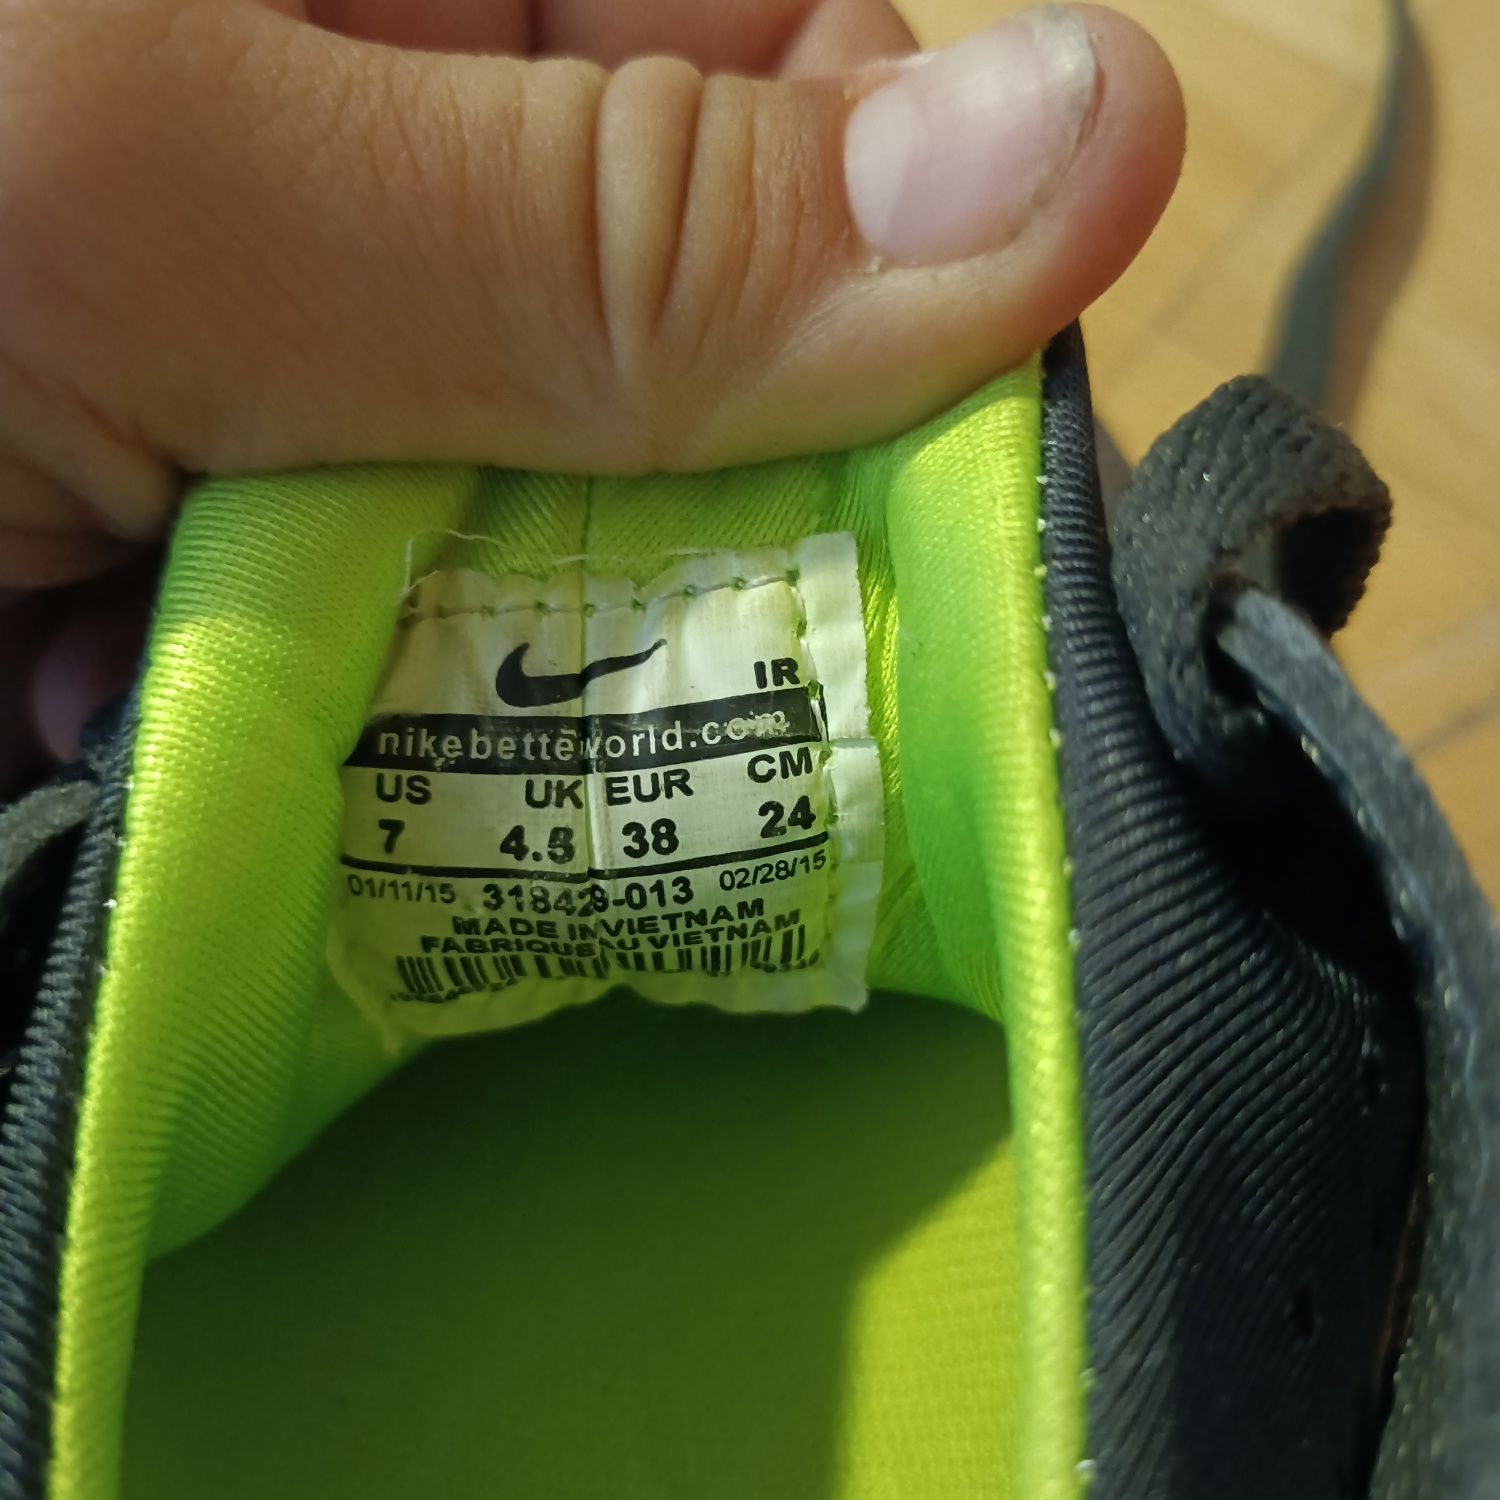 Buty Nike huarache czarno limonkowe